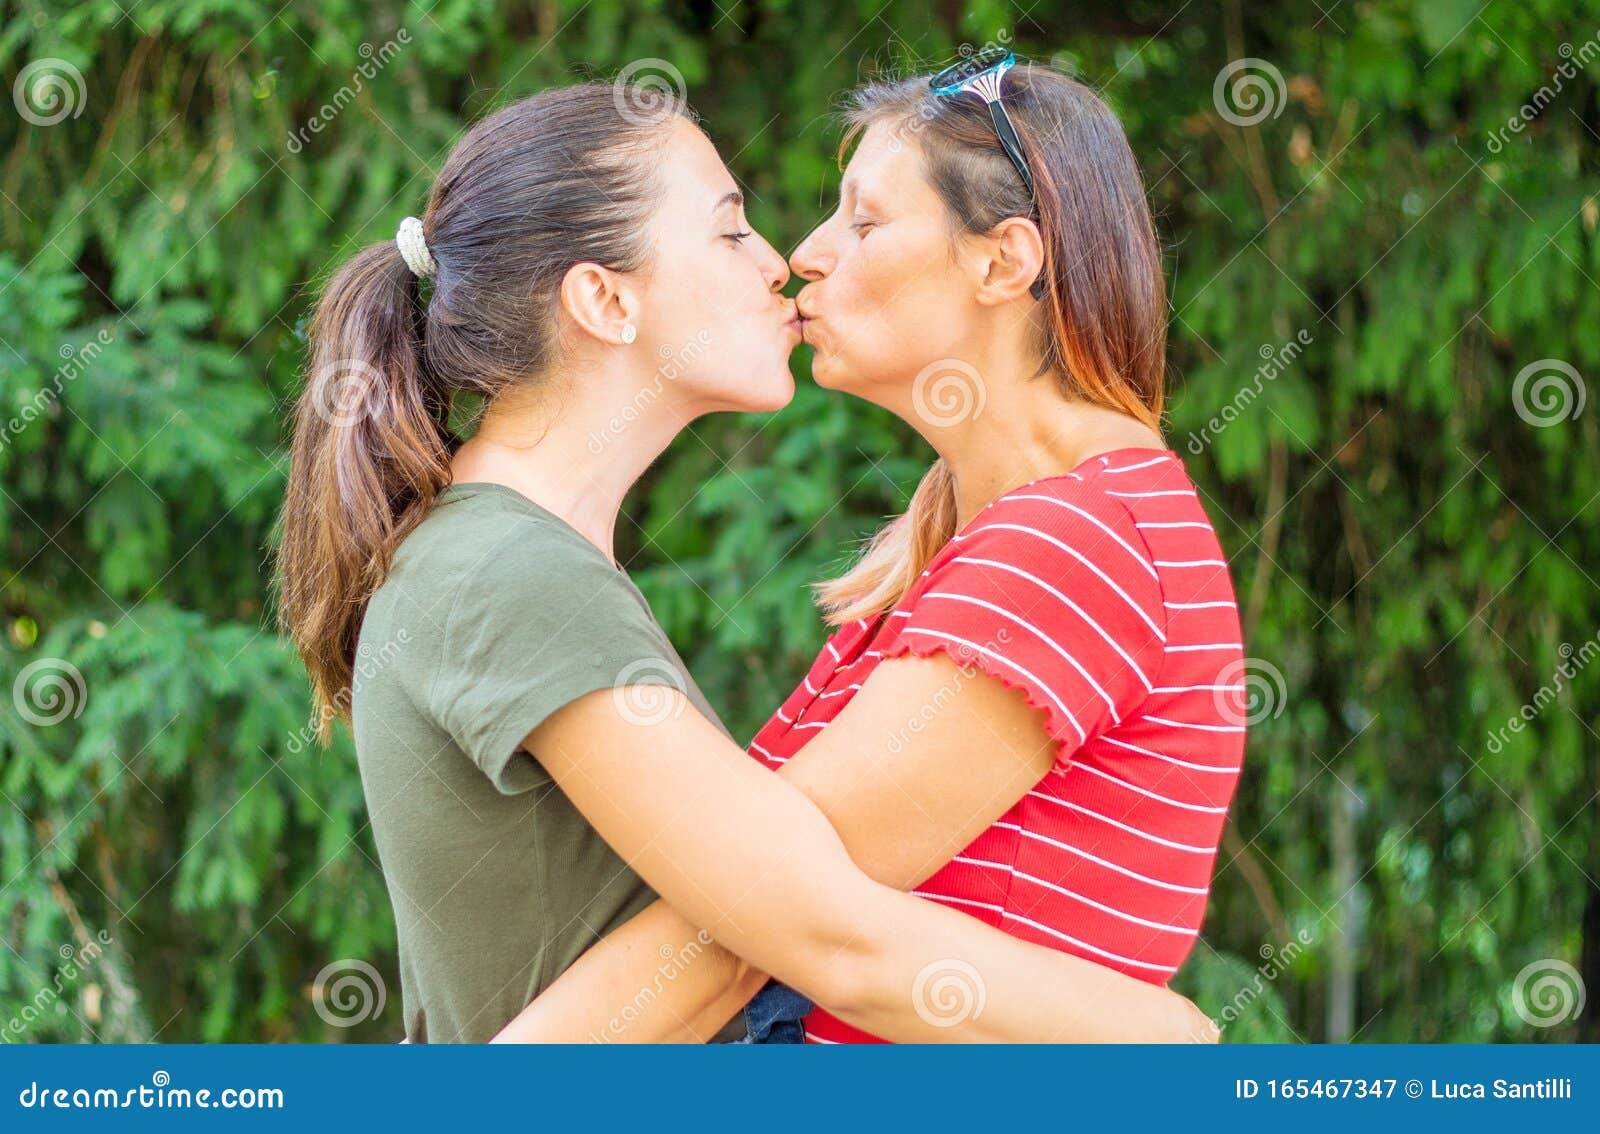 girl kiss kissing lesbian